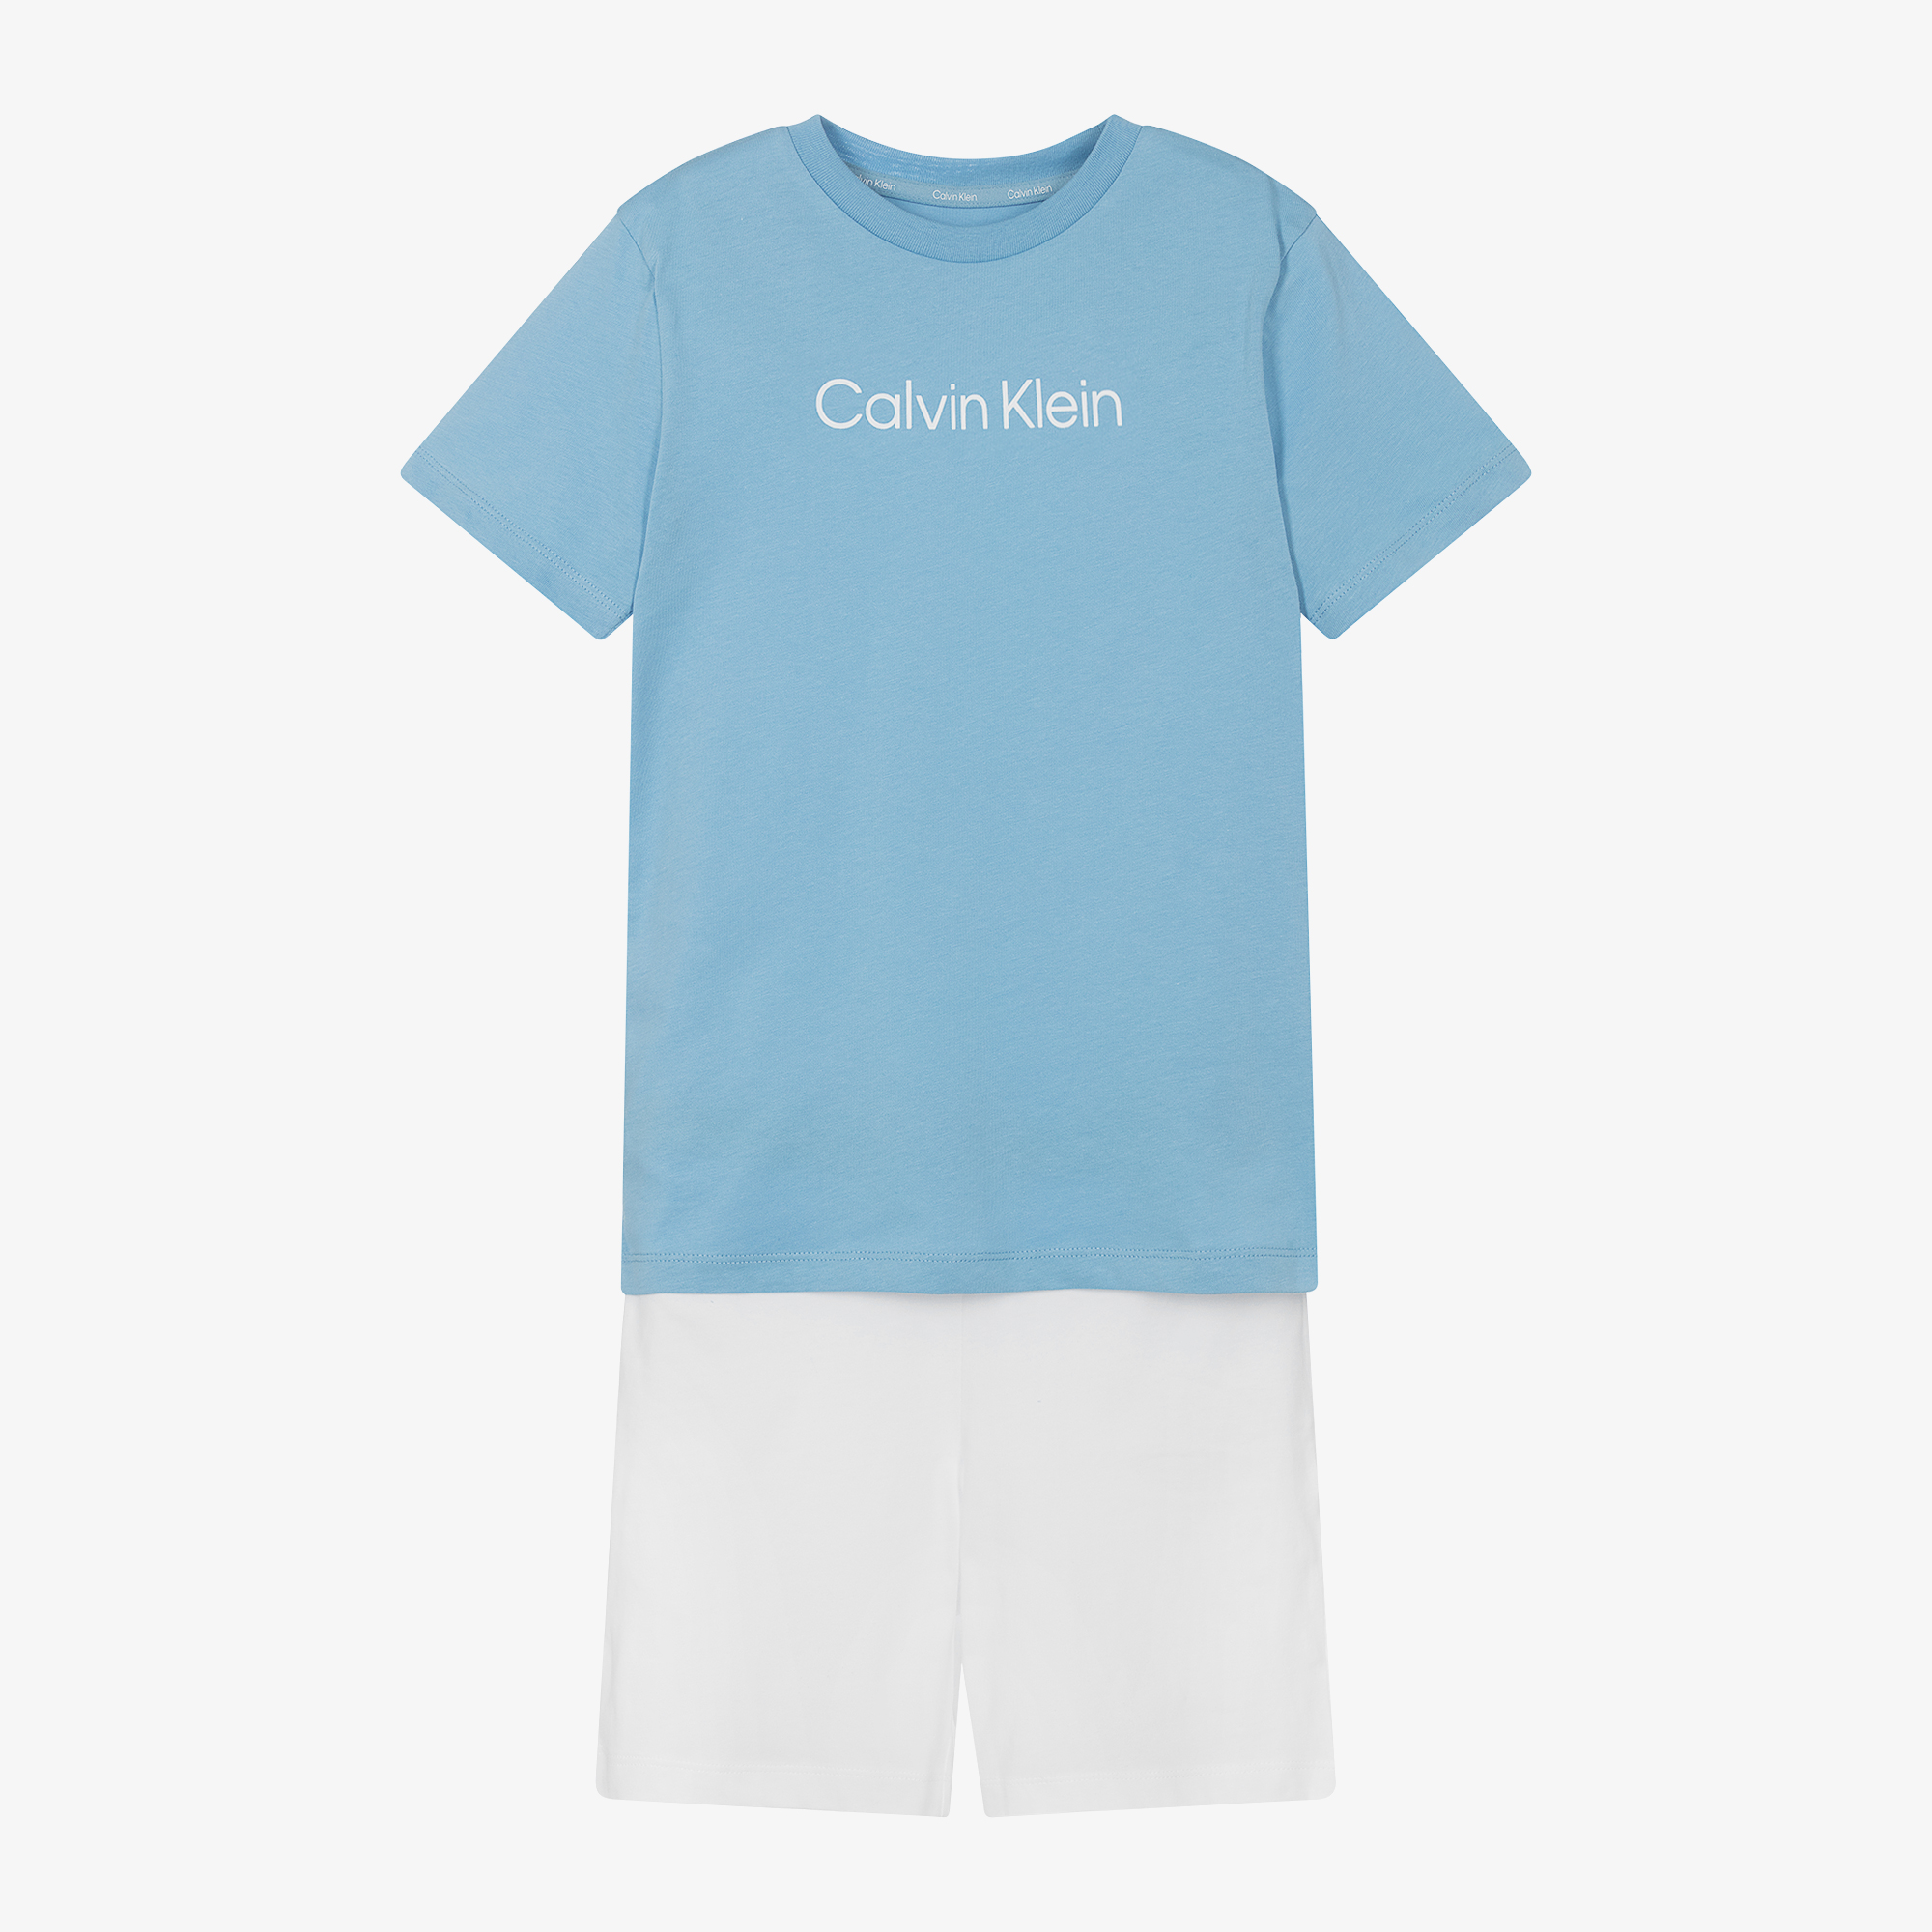 Pijamas y Batas Calvin Klein para Niños en Rebajas - Outlet Online